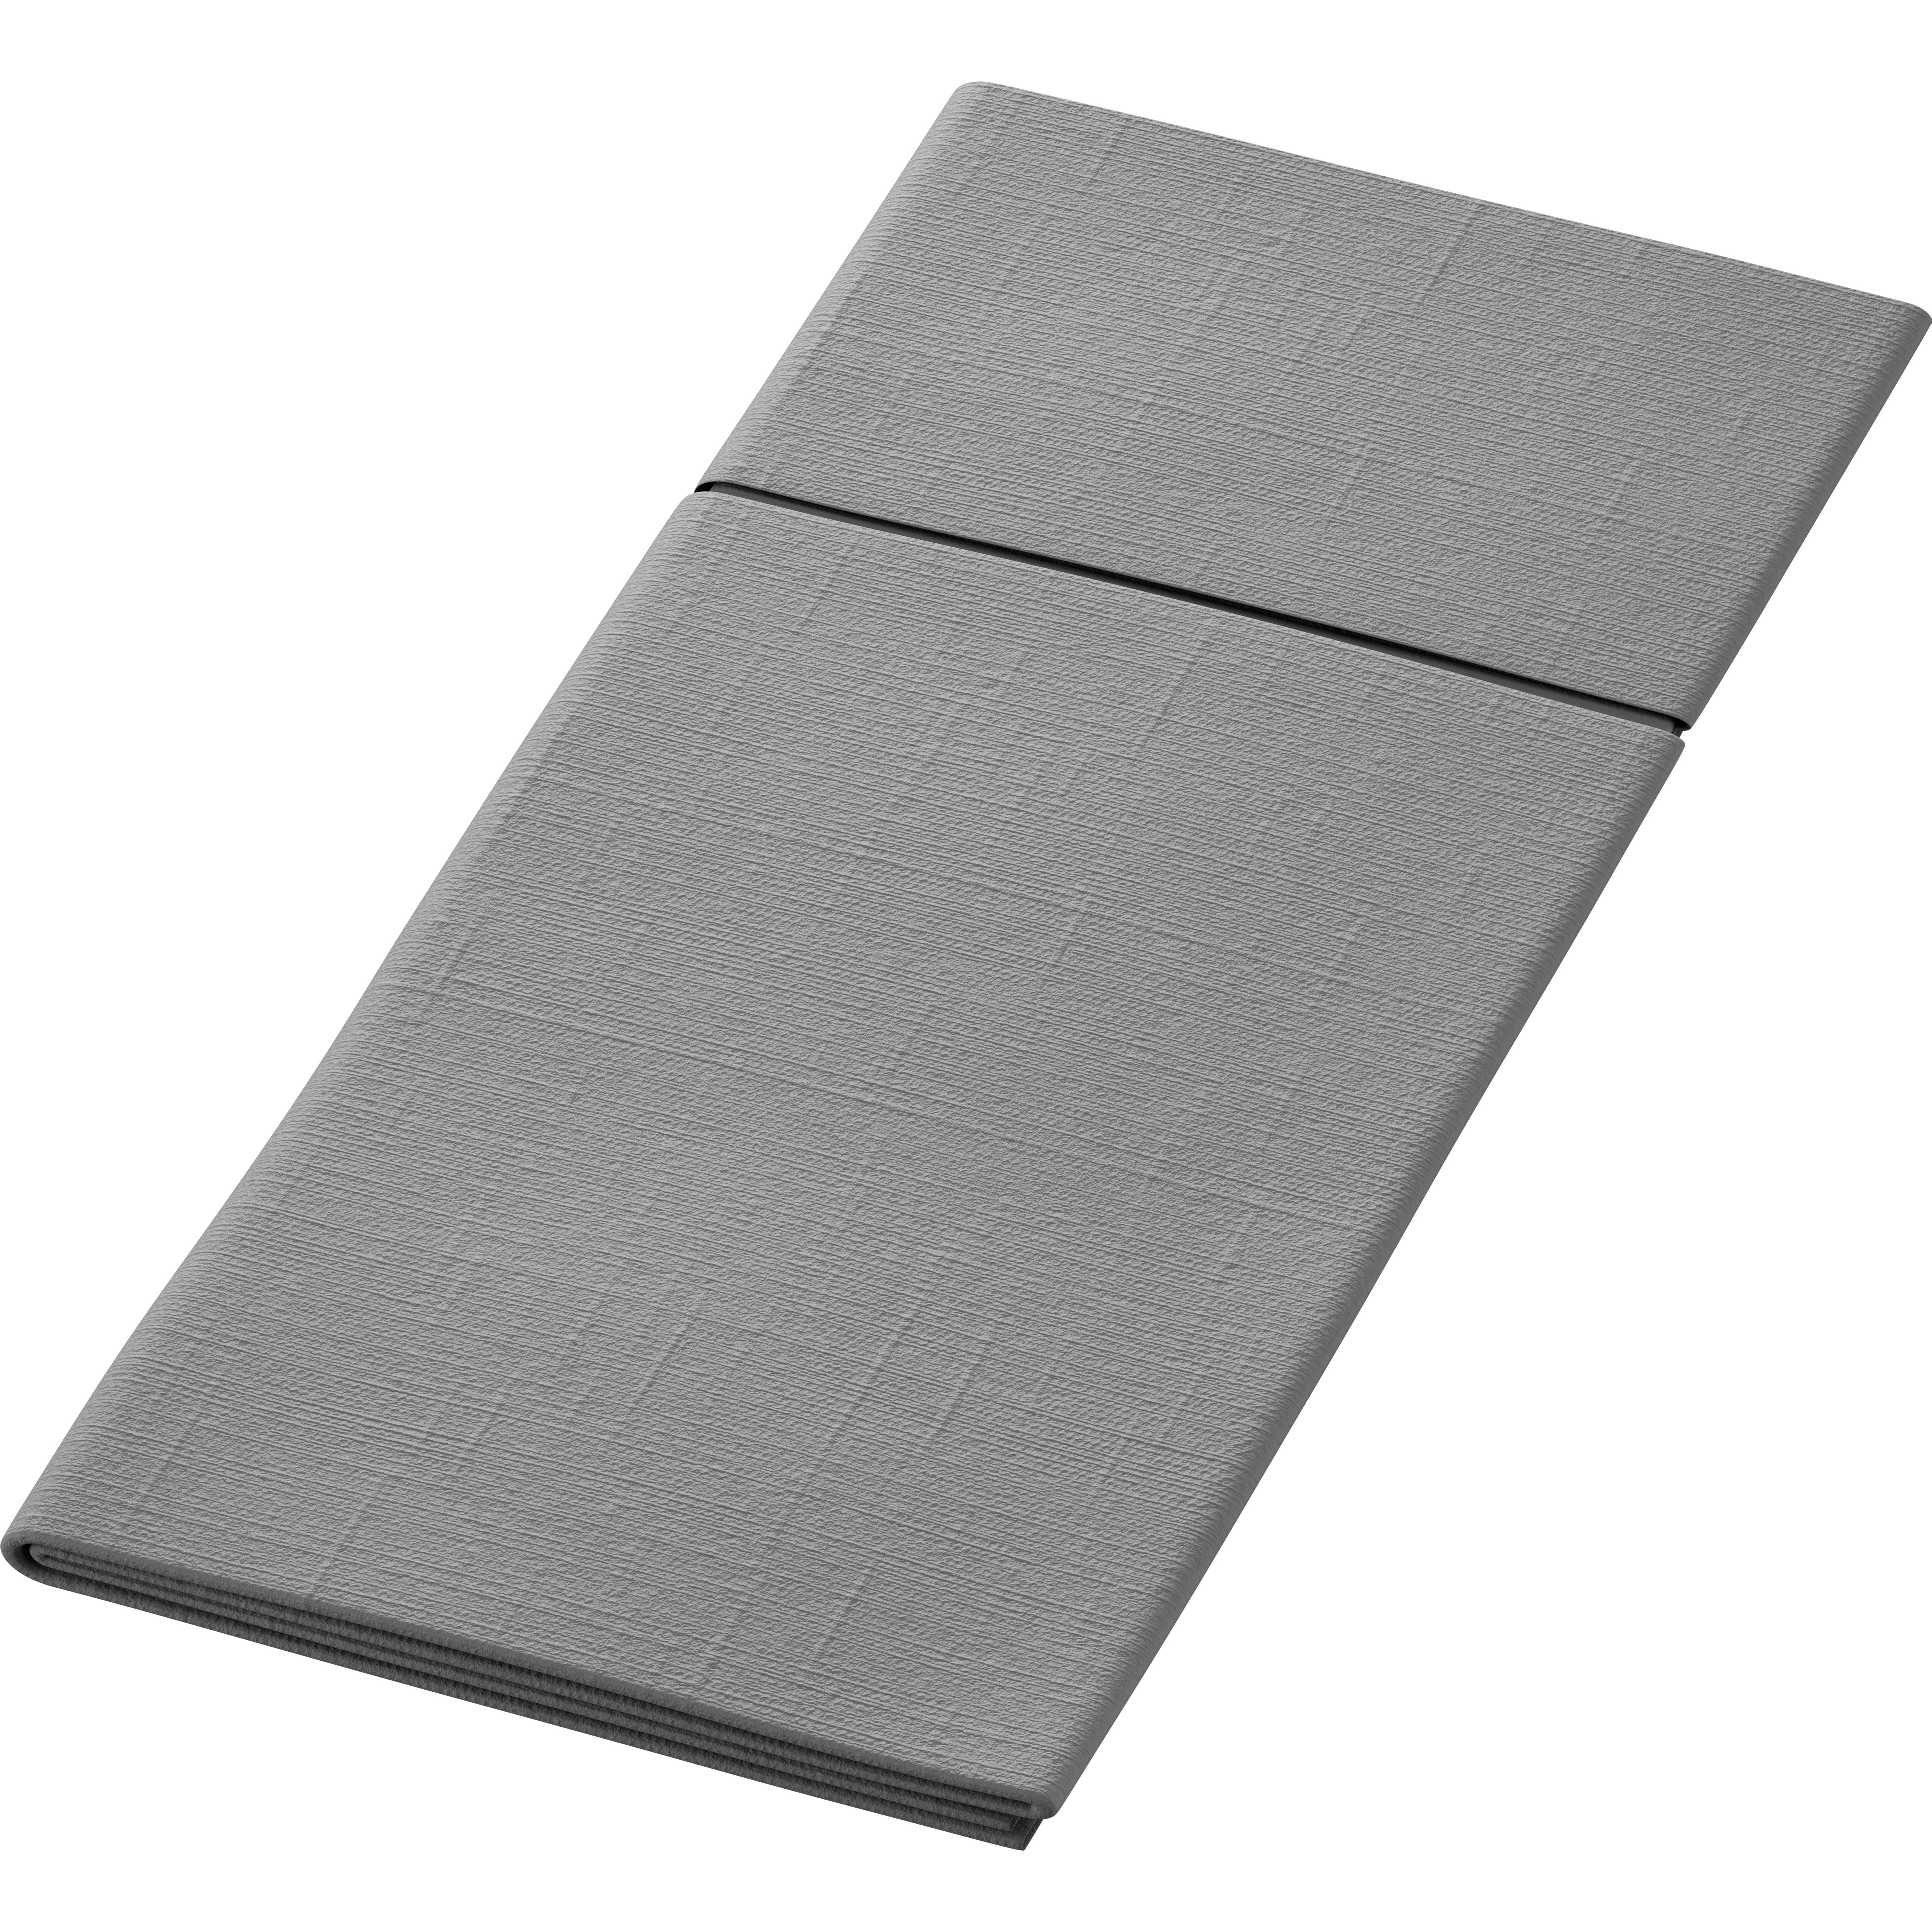 Bio Duniletto Slim , 400 x 330 mm, granite grey